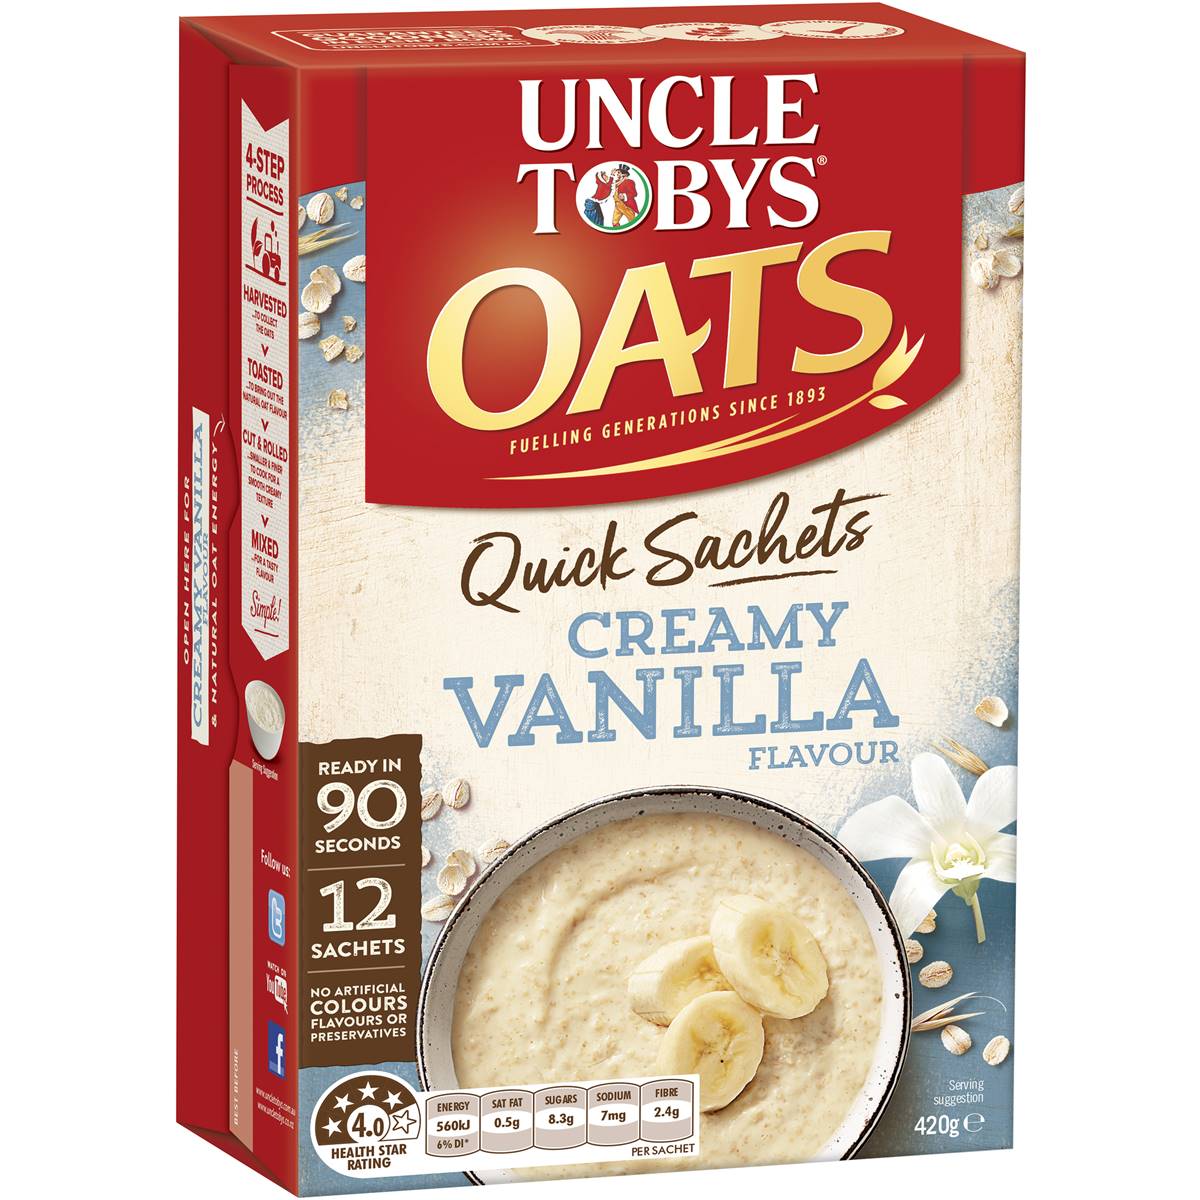 Calories in Uncle Tobys Oats Quick Sachets Creamy Vanilla Porridge